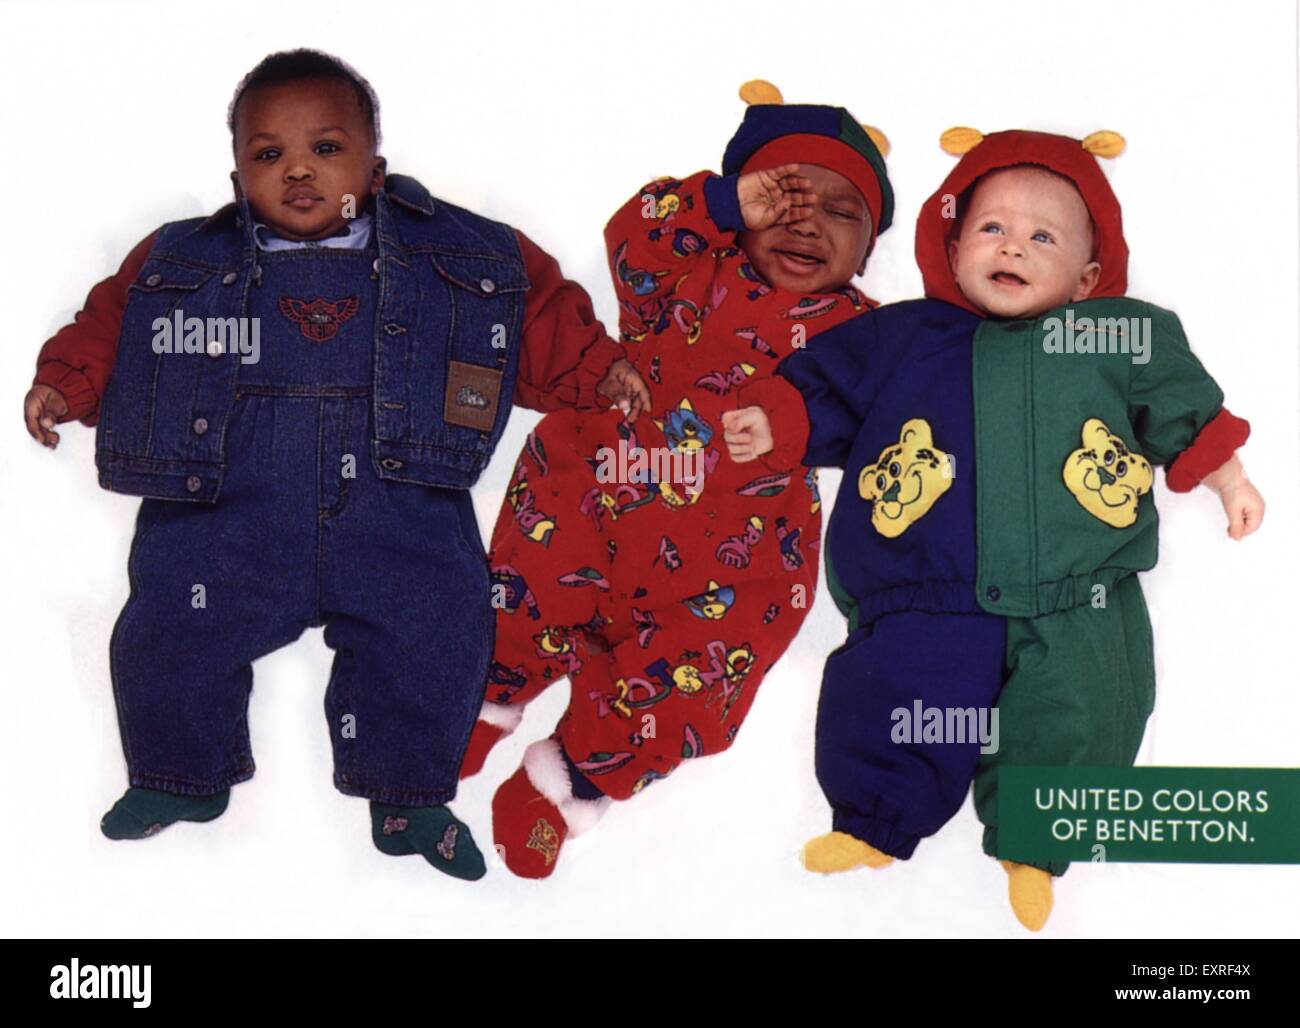 1990s UK colores unidos de Benetton Revista anuncio Fotografía de stock -  Alamy